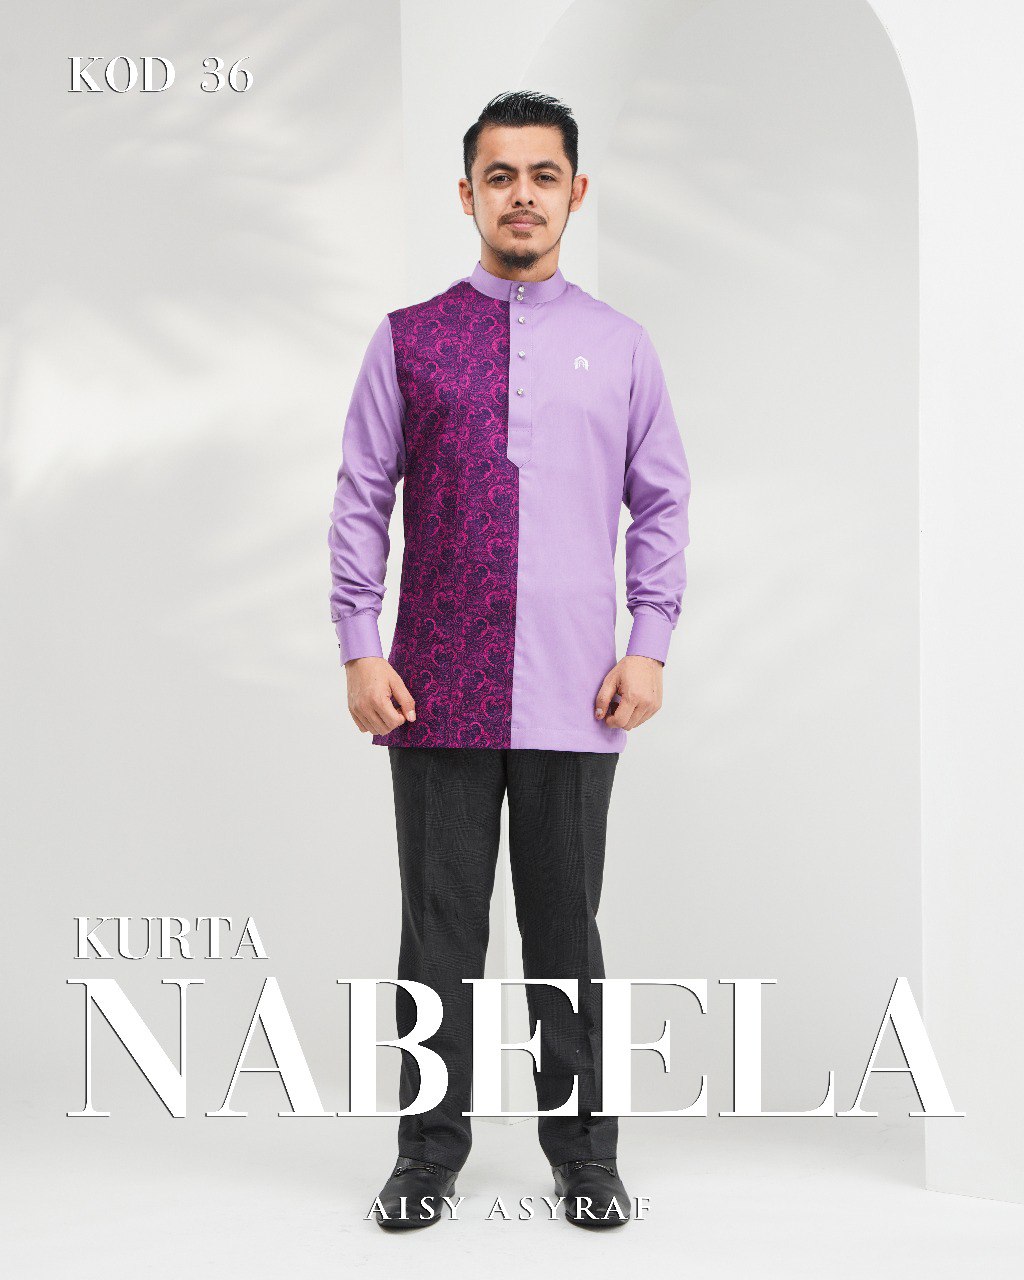 Kurta Nabeela - Kod 36 (Lavendar Abstract)  - NEW RELEASE